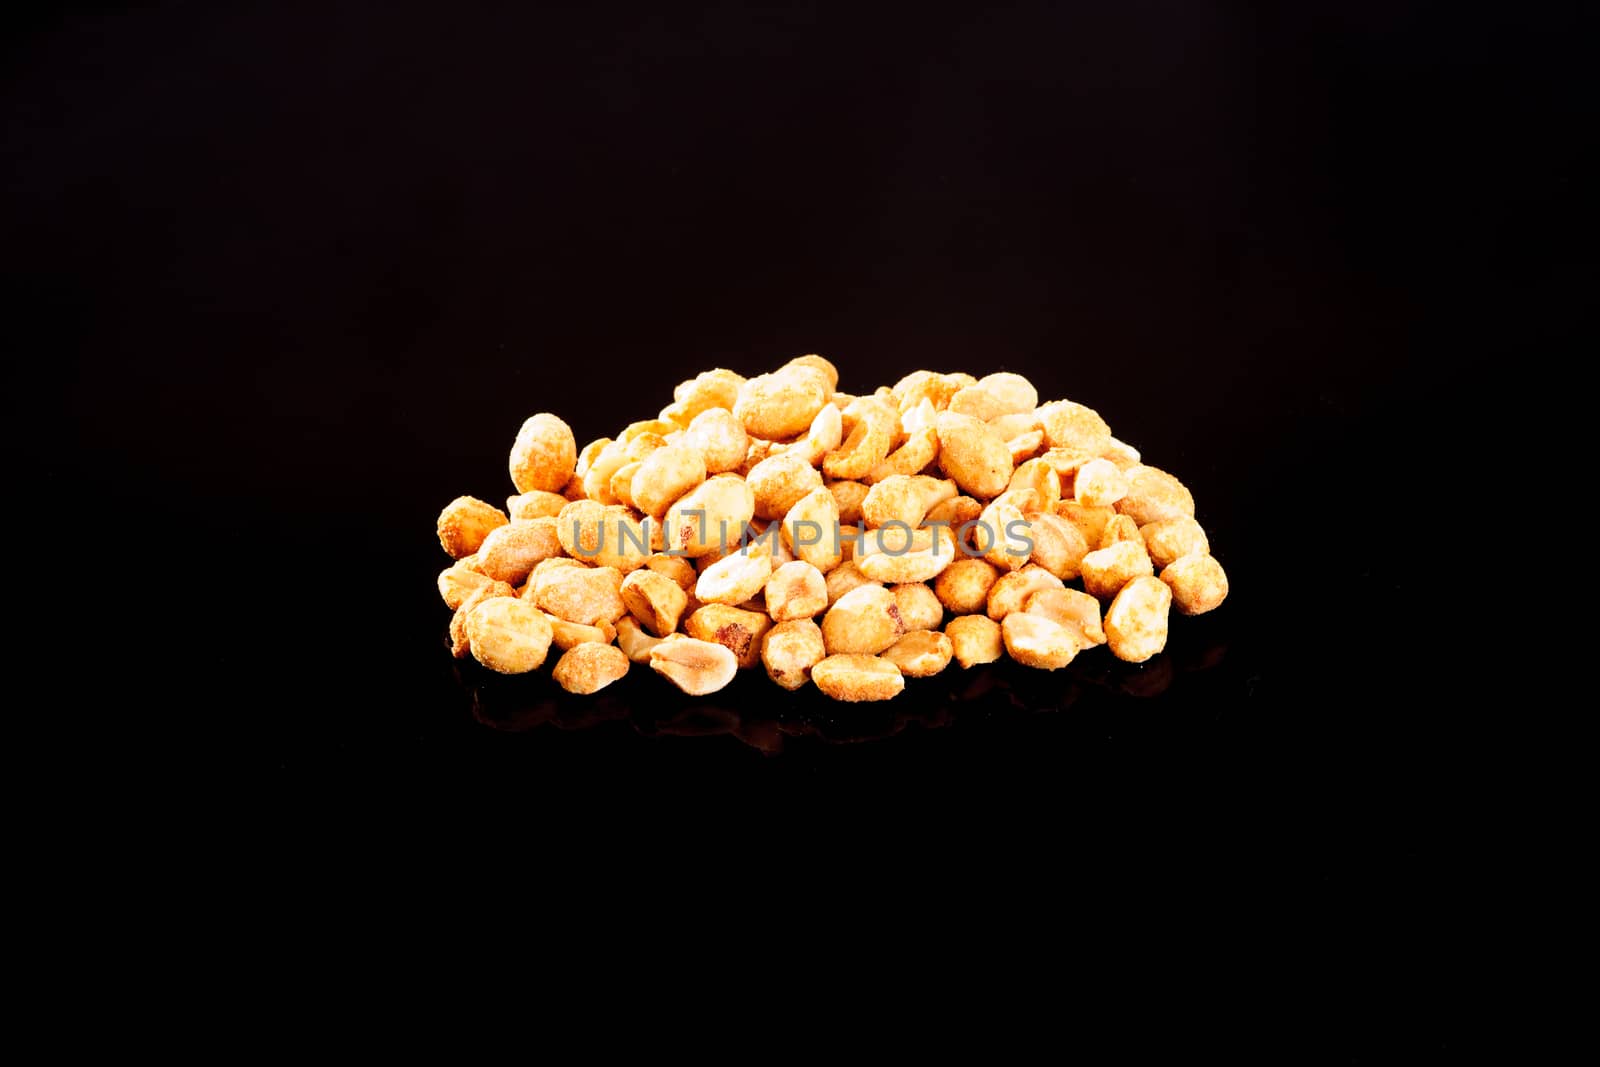 Roasted Salted Peanuts on a black background